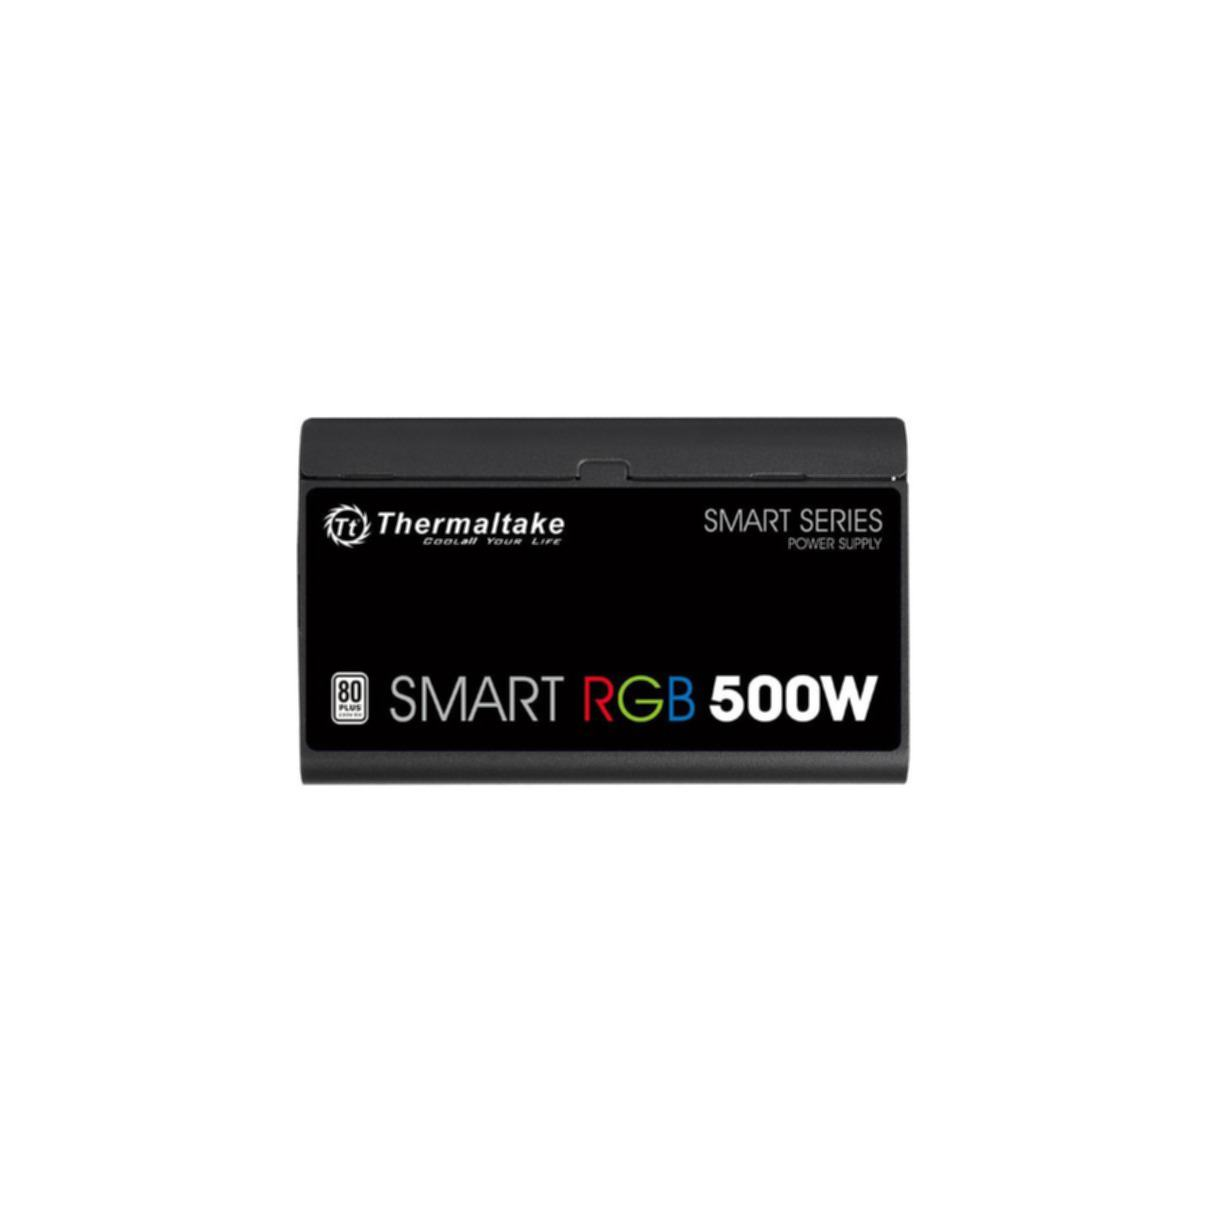 Watt Smart RGB Netzteil PC 500 THERMALTAKE